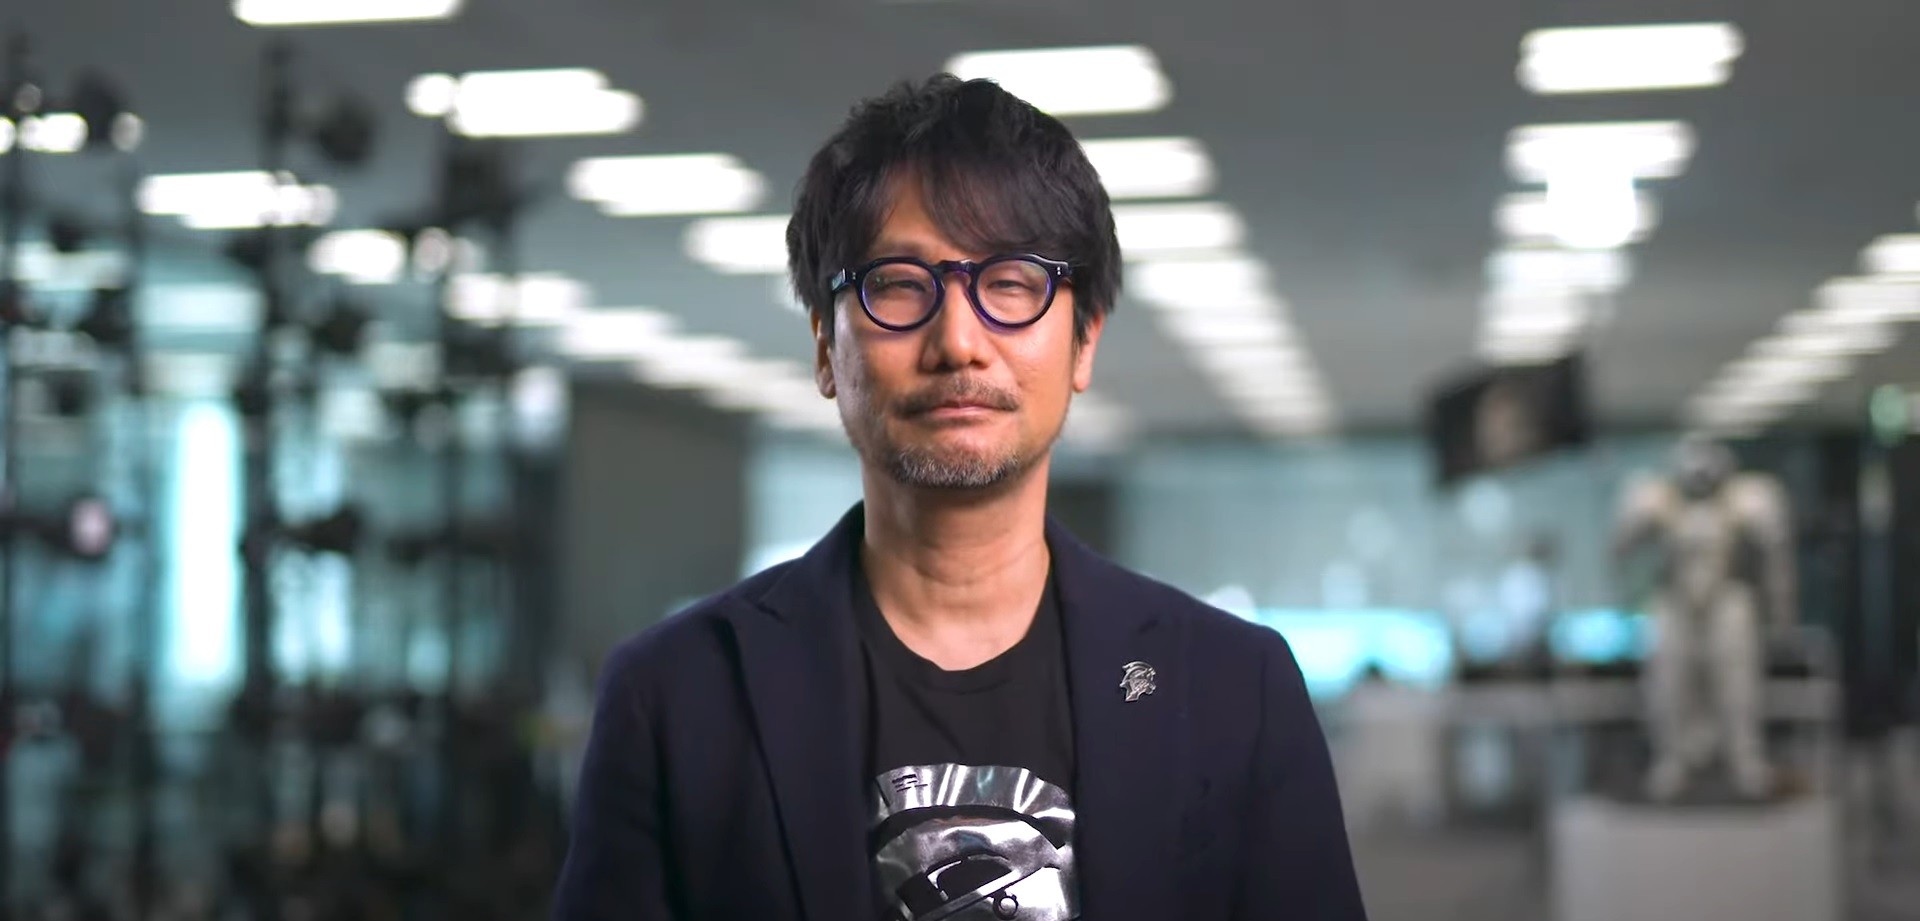 Kojima Productions ยังคงสัมพันธ์ดีกับ PlayStation แม้เกมใหม่จะมา Xbox ก็ตาม